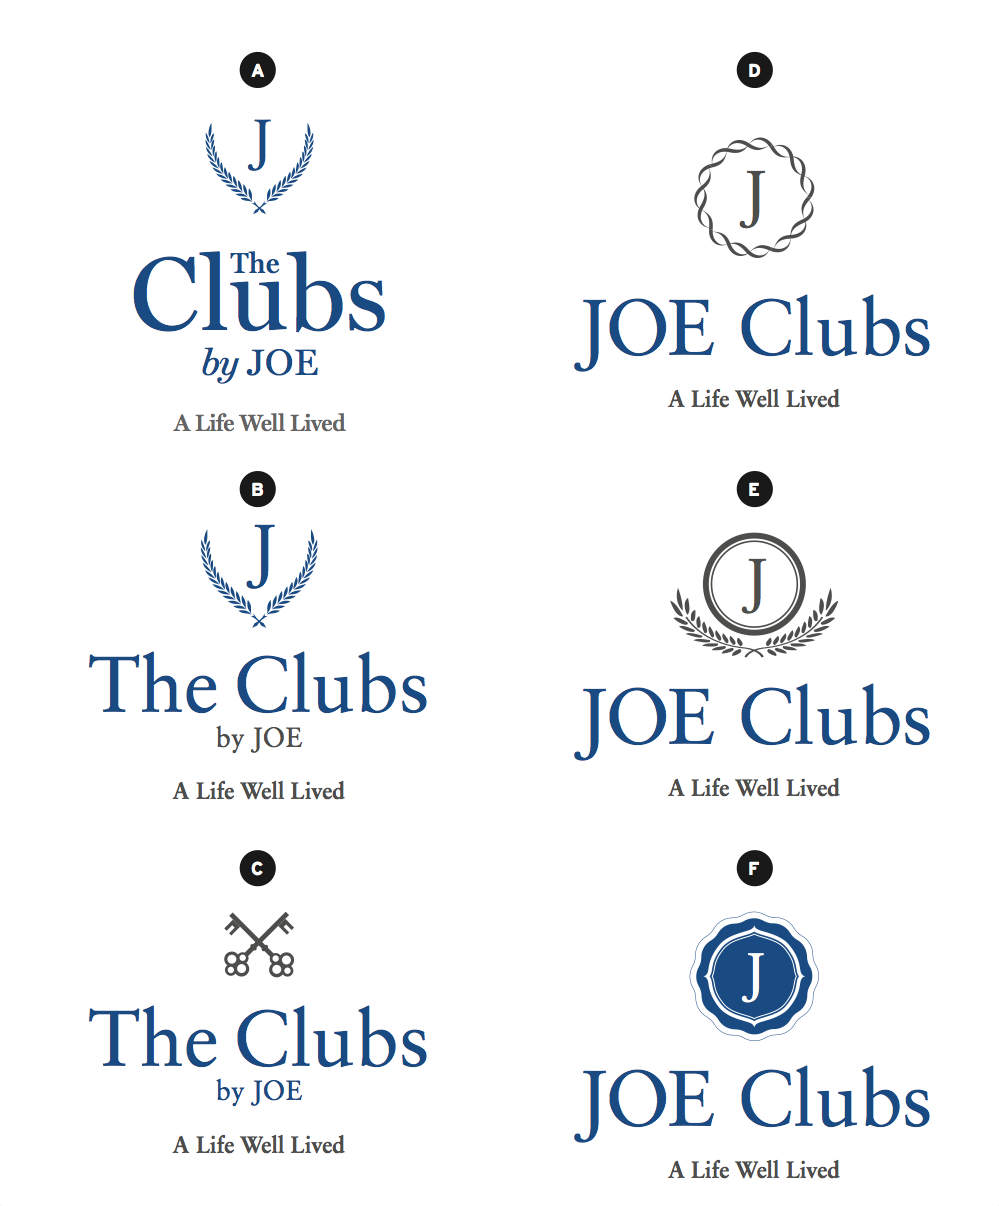 Design Process for St JOE's new logo